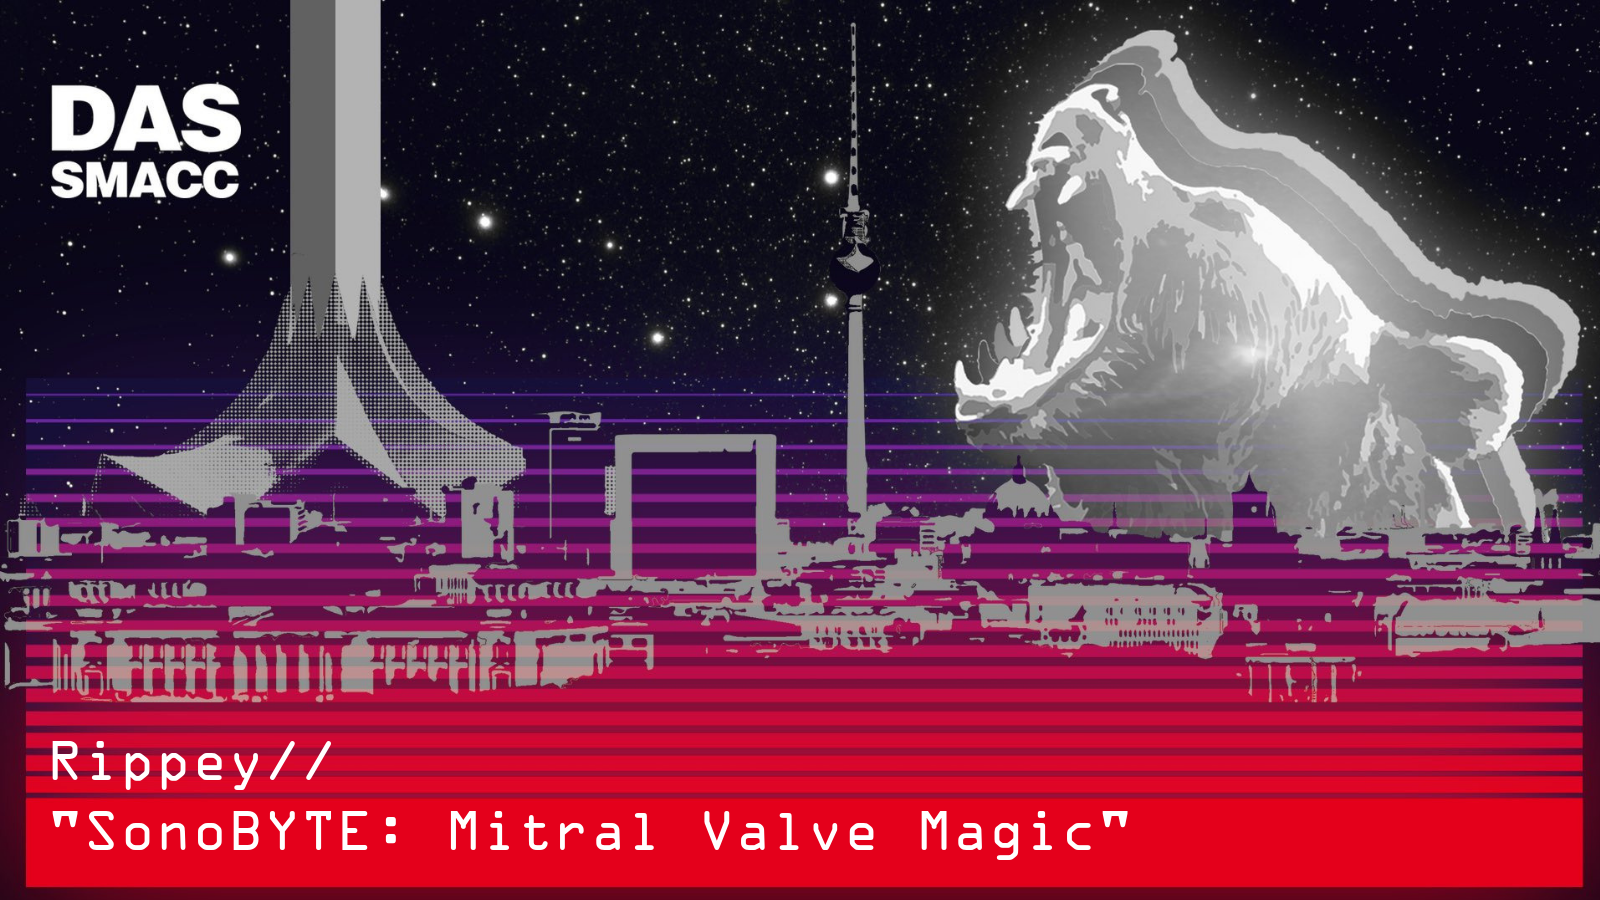 SonoBYTE: Mitral Valve Magic